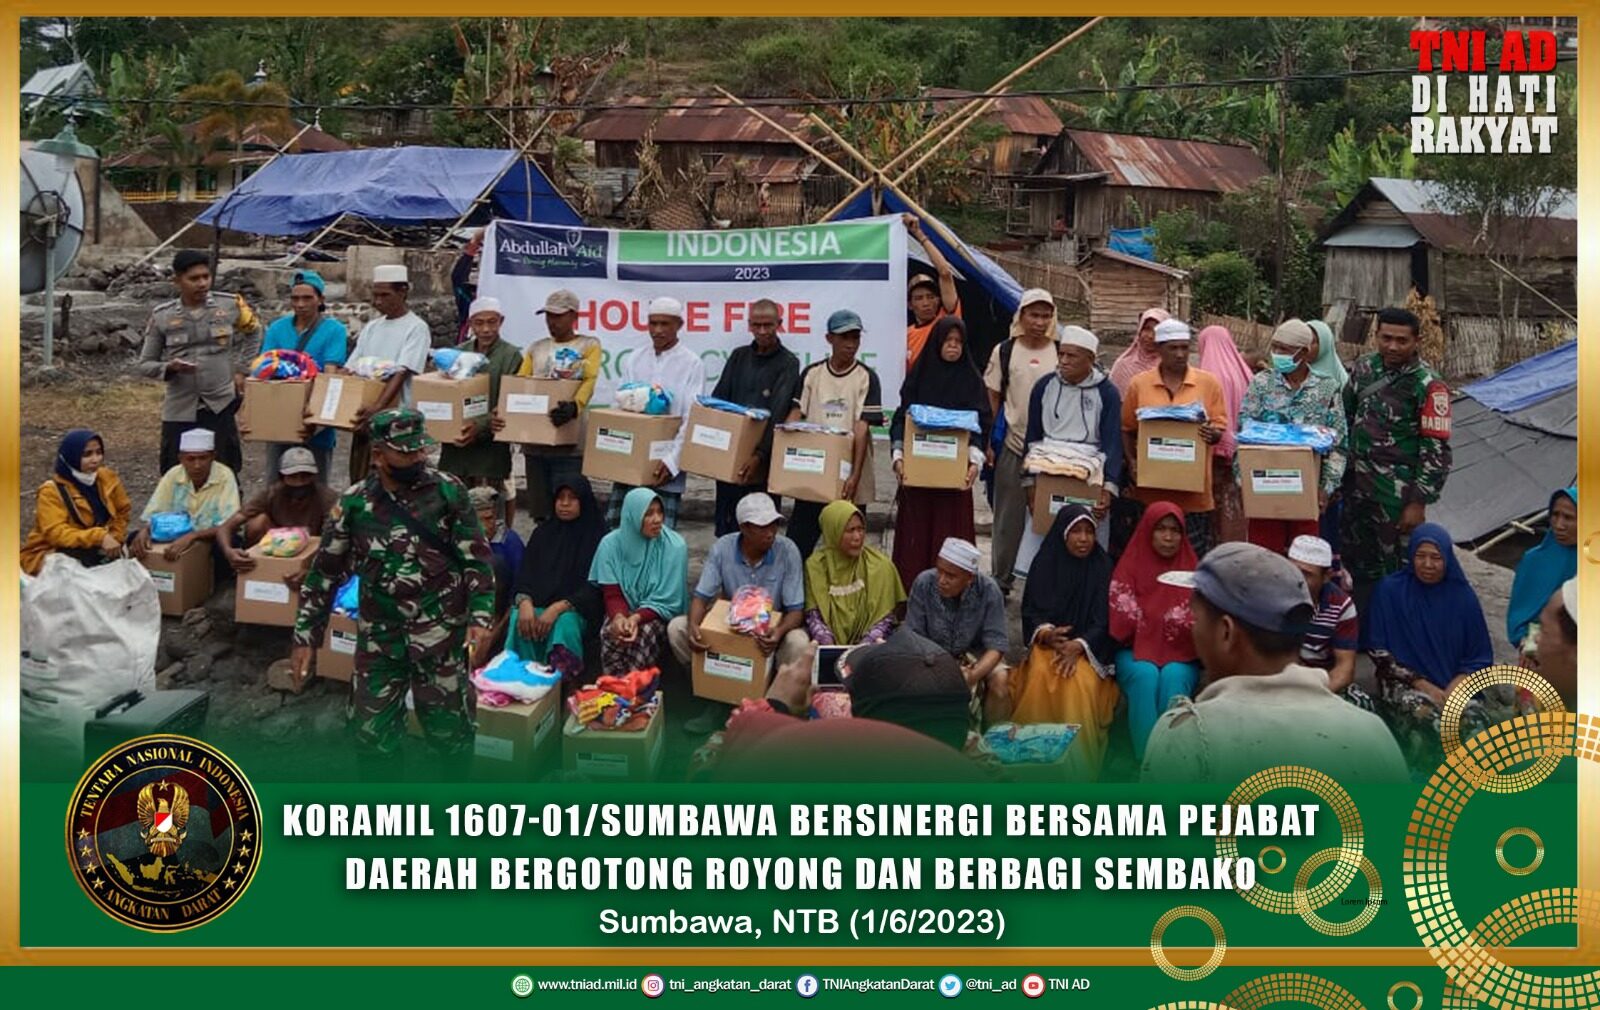 Koramil 1607-01/Sumbawa Bersinergi Bersama Pejabat Daerah Bergotong Royong dan Berbagi Sembako